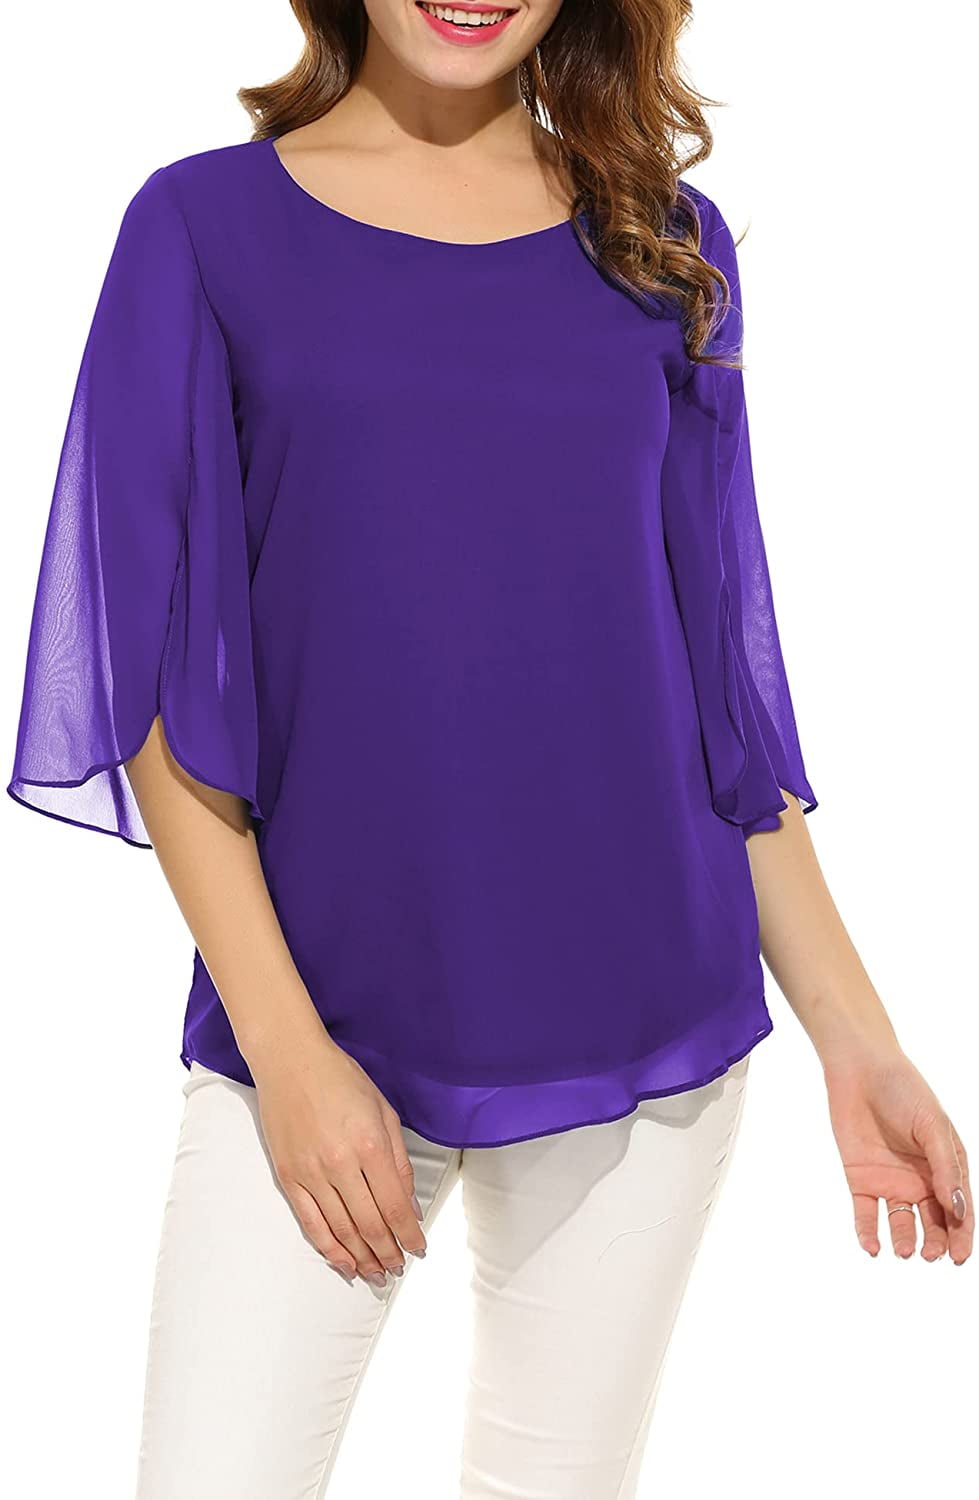 Womens Casual Neck Top 3/4 Sleeve Chiffon Blouse Shirt Tops Deep Purple With - Walmart.com